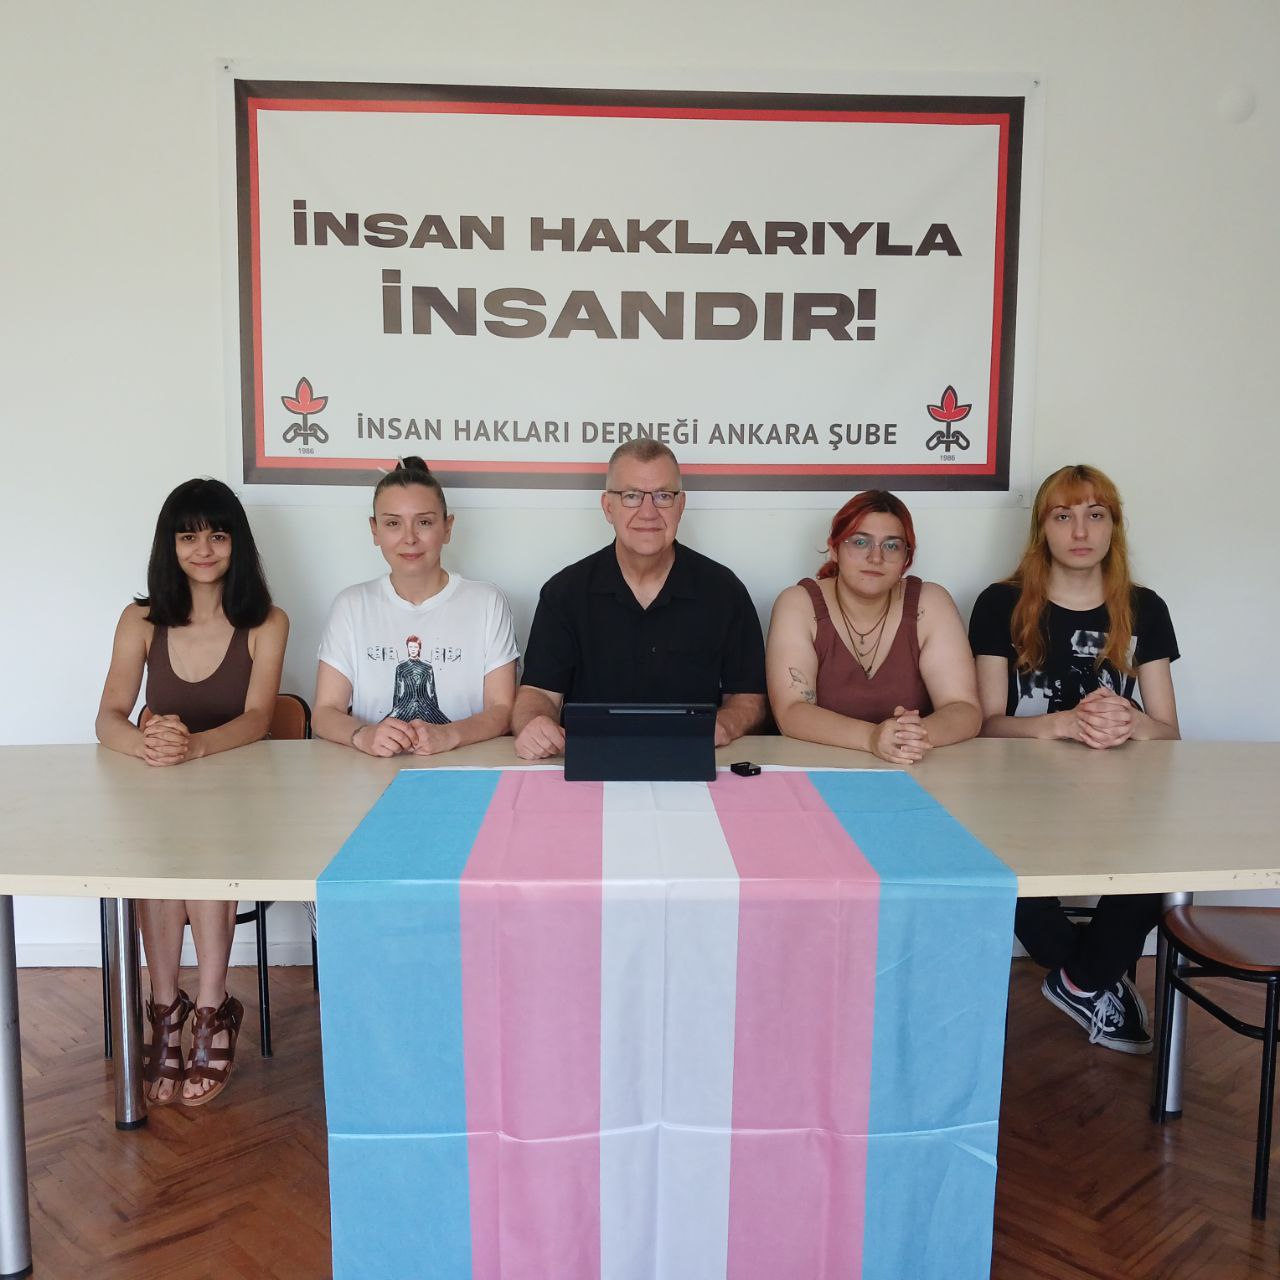 İHD Ankara Şube LGBTİ+ Hakları Komisyonu: “Nefret suçlarının takipçisi olacağız" | Kaos GL - LGBTİ+ Haber Portalı